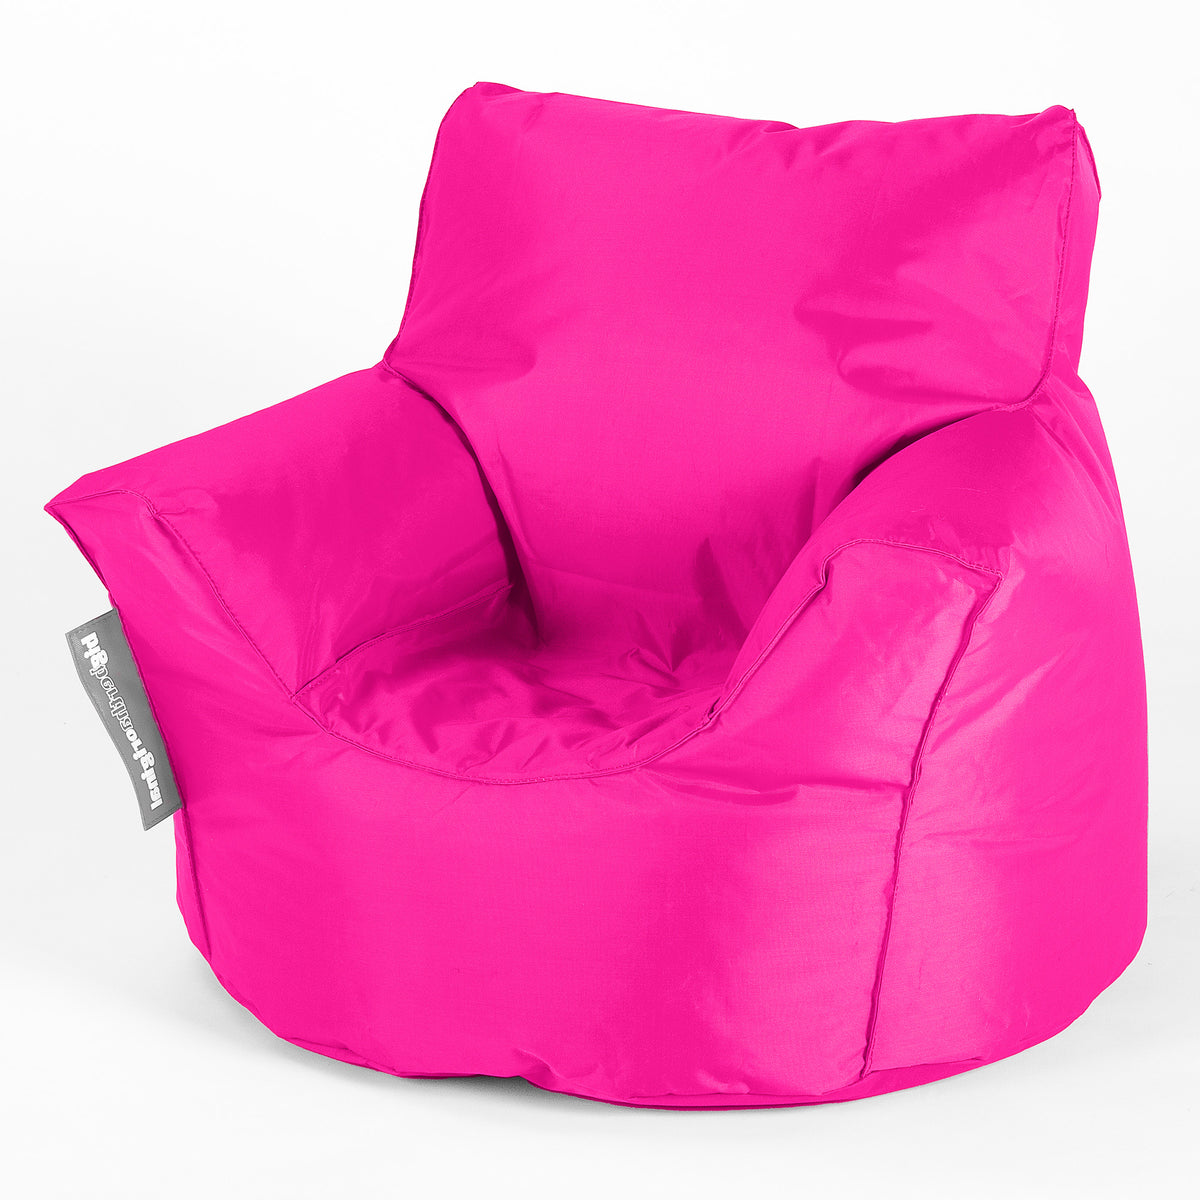 Buy rucomfy Fabric Snug Bean Bag Chair - Light Grey | Bean bags | Argos